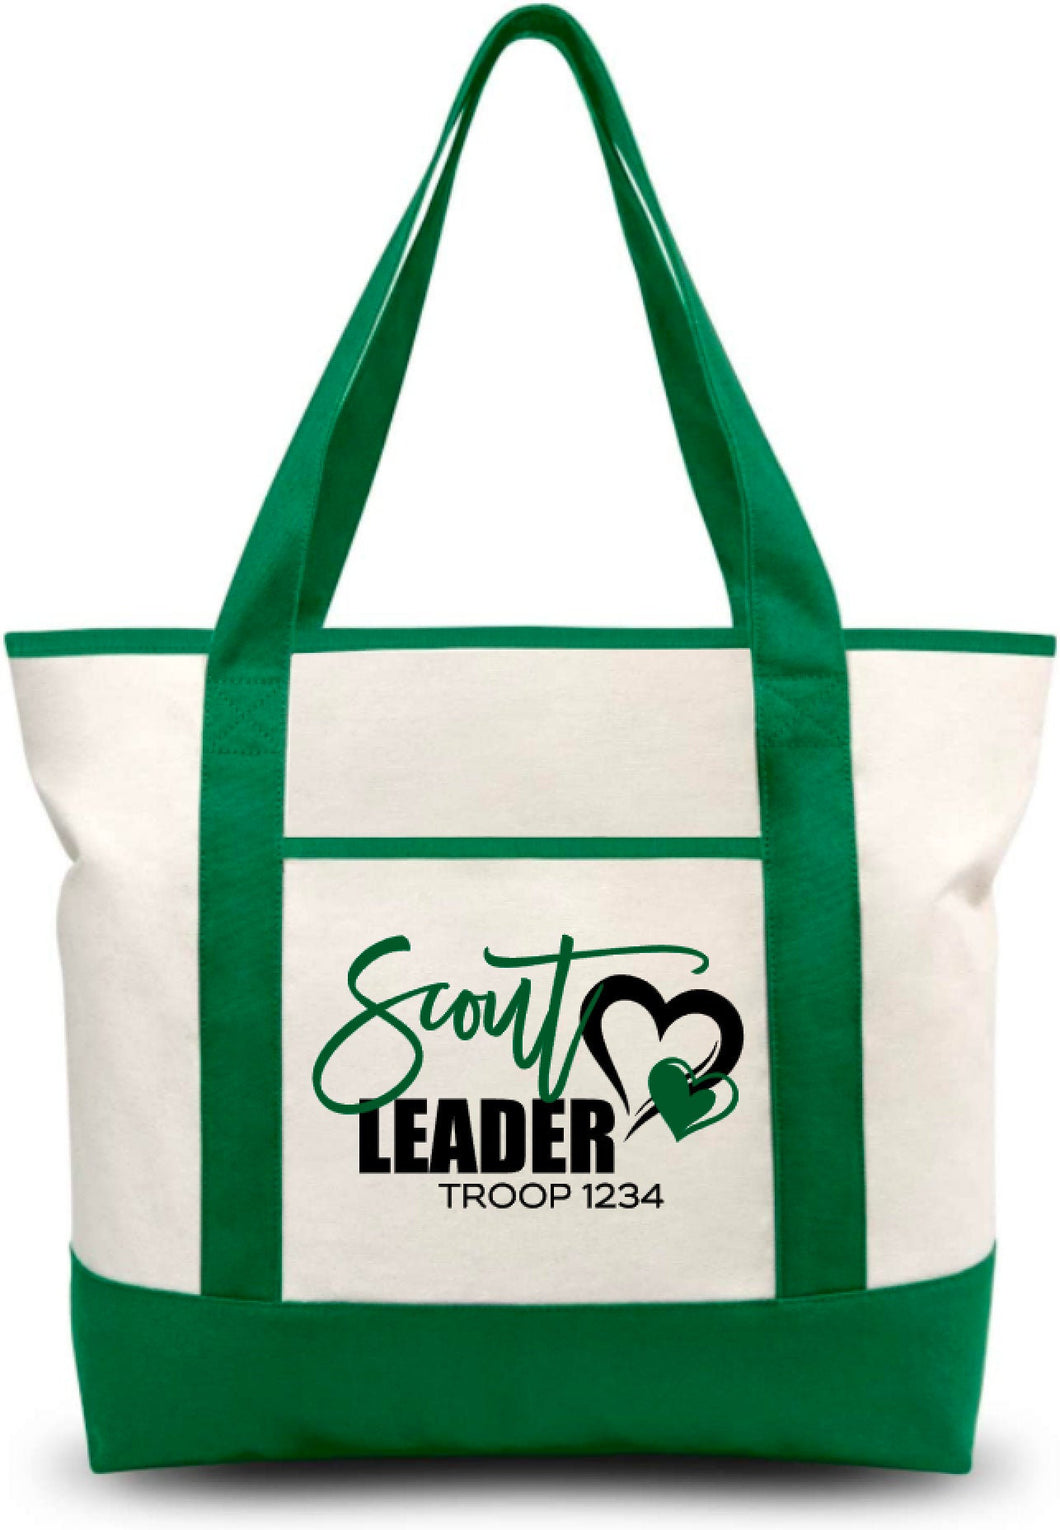 Scout Leader Tote Bag With Leader Design